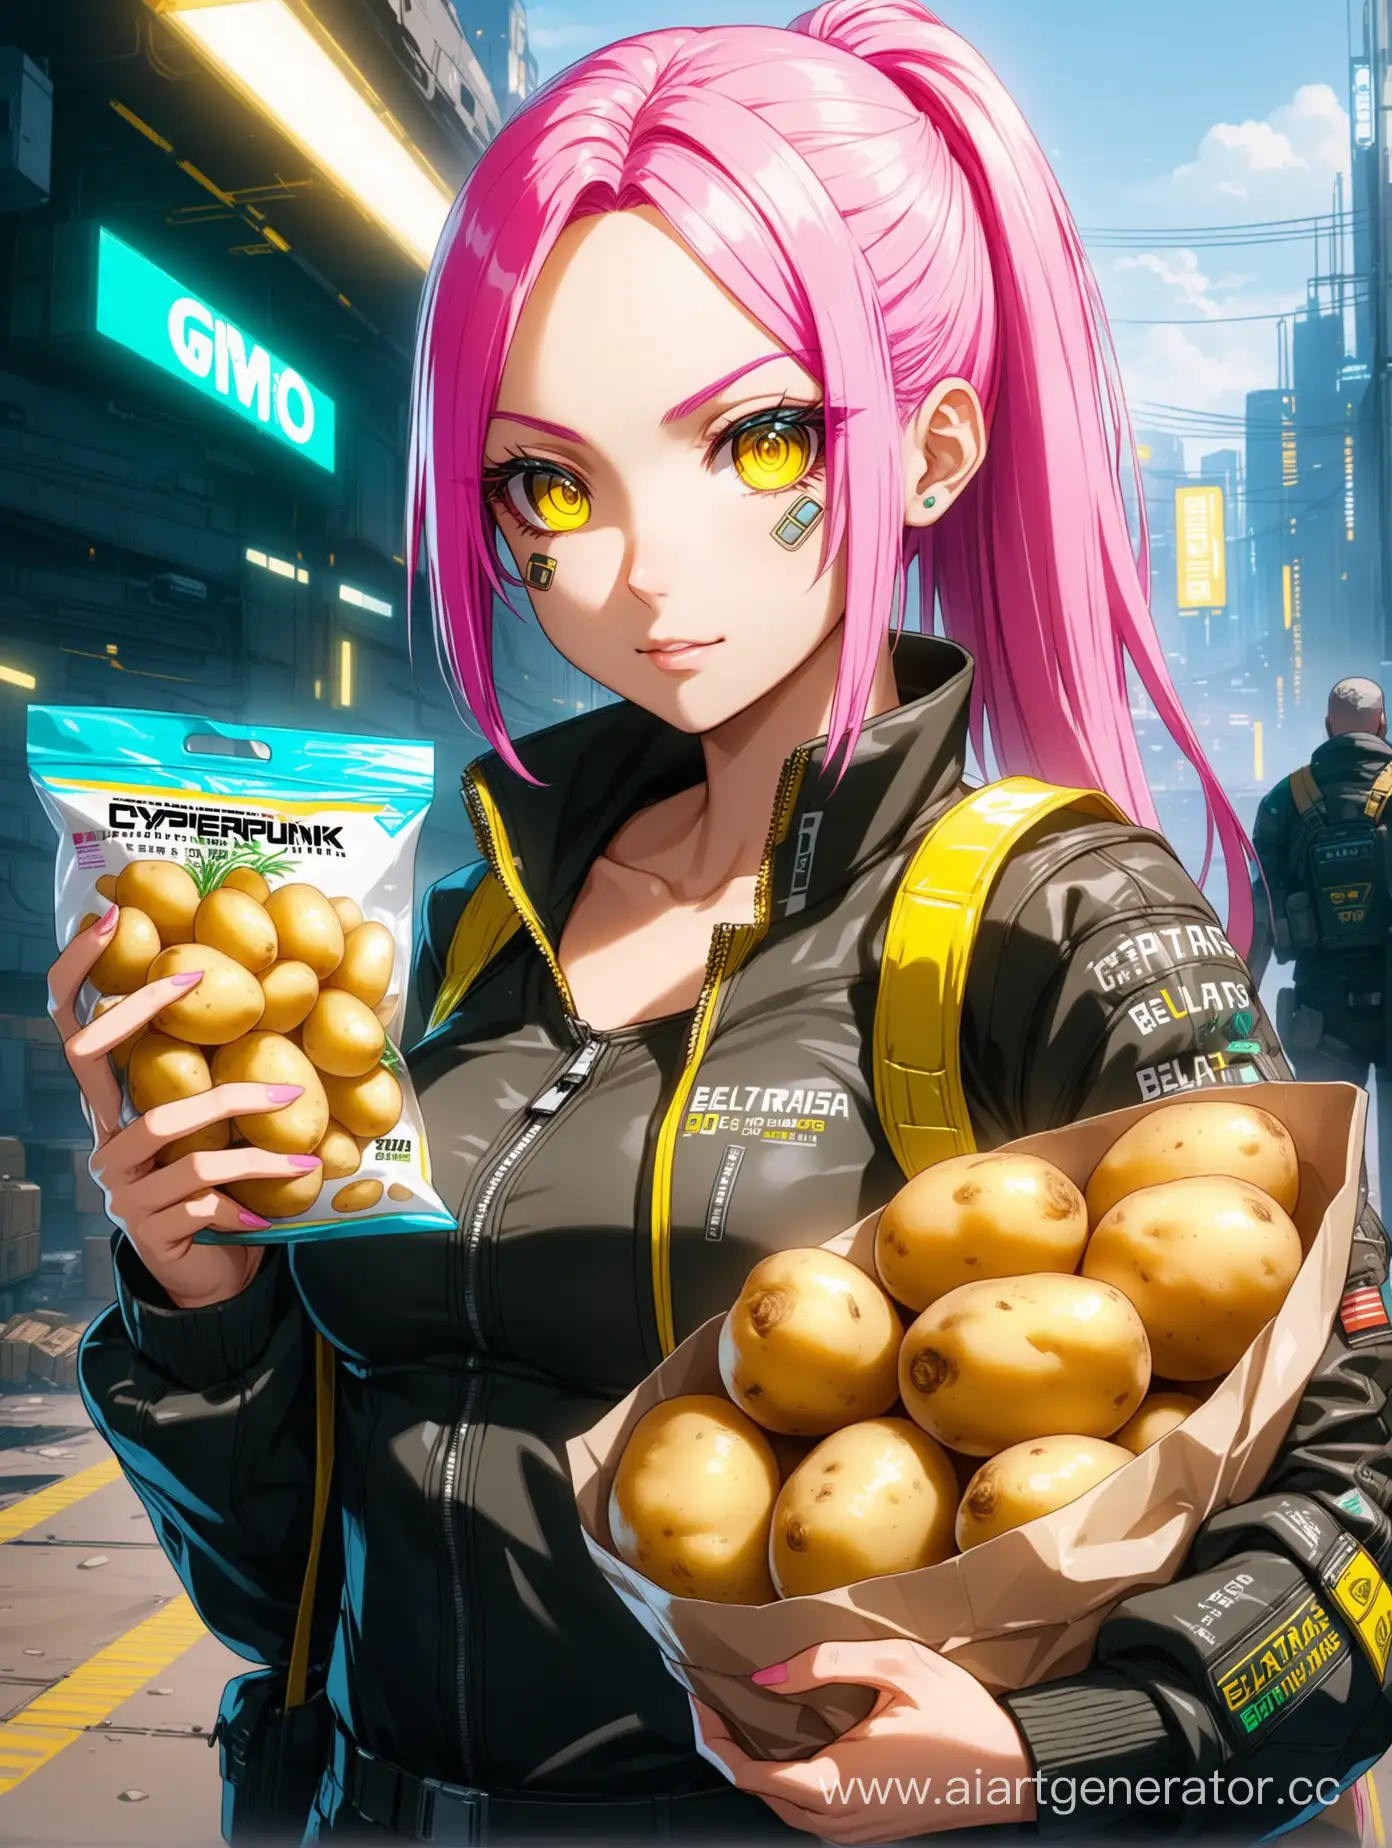 Cyberpunk-2070-Anime-Girl-Holding-BelaTrans-GMO-Potatoes-Bag